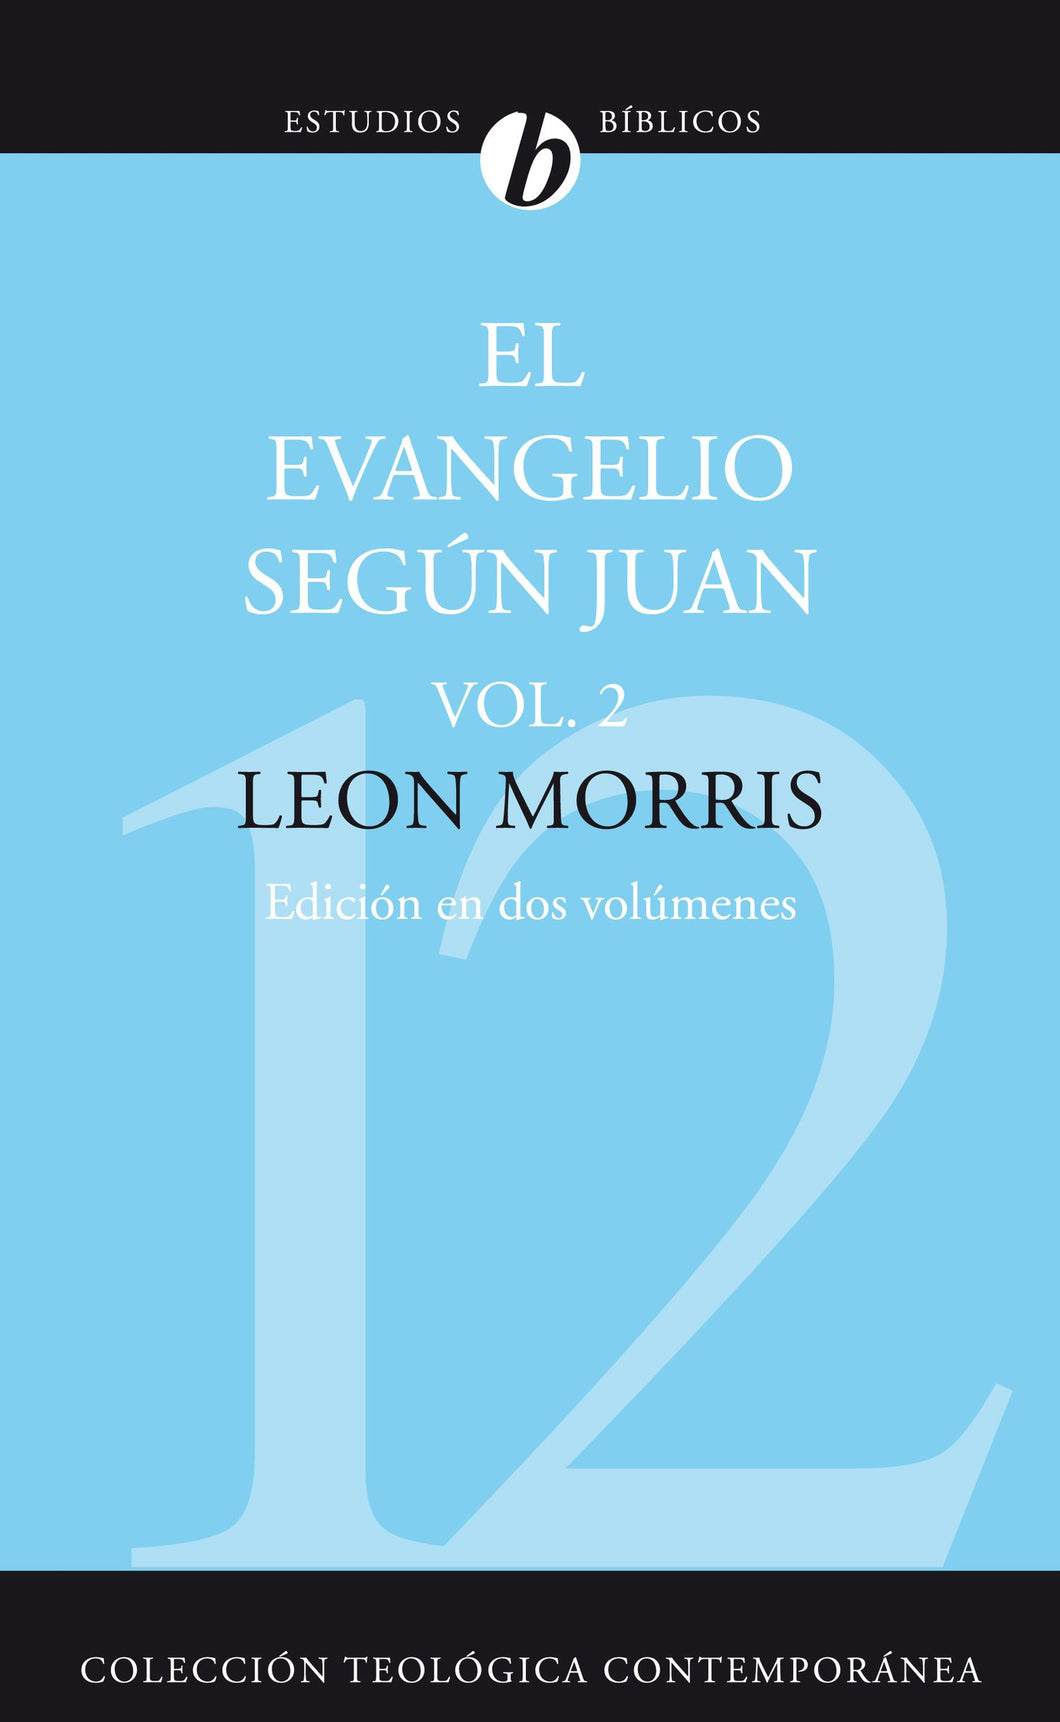 El Evangelio según Juan Vol. 2 - Leon Morris